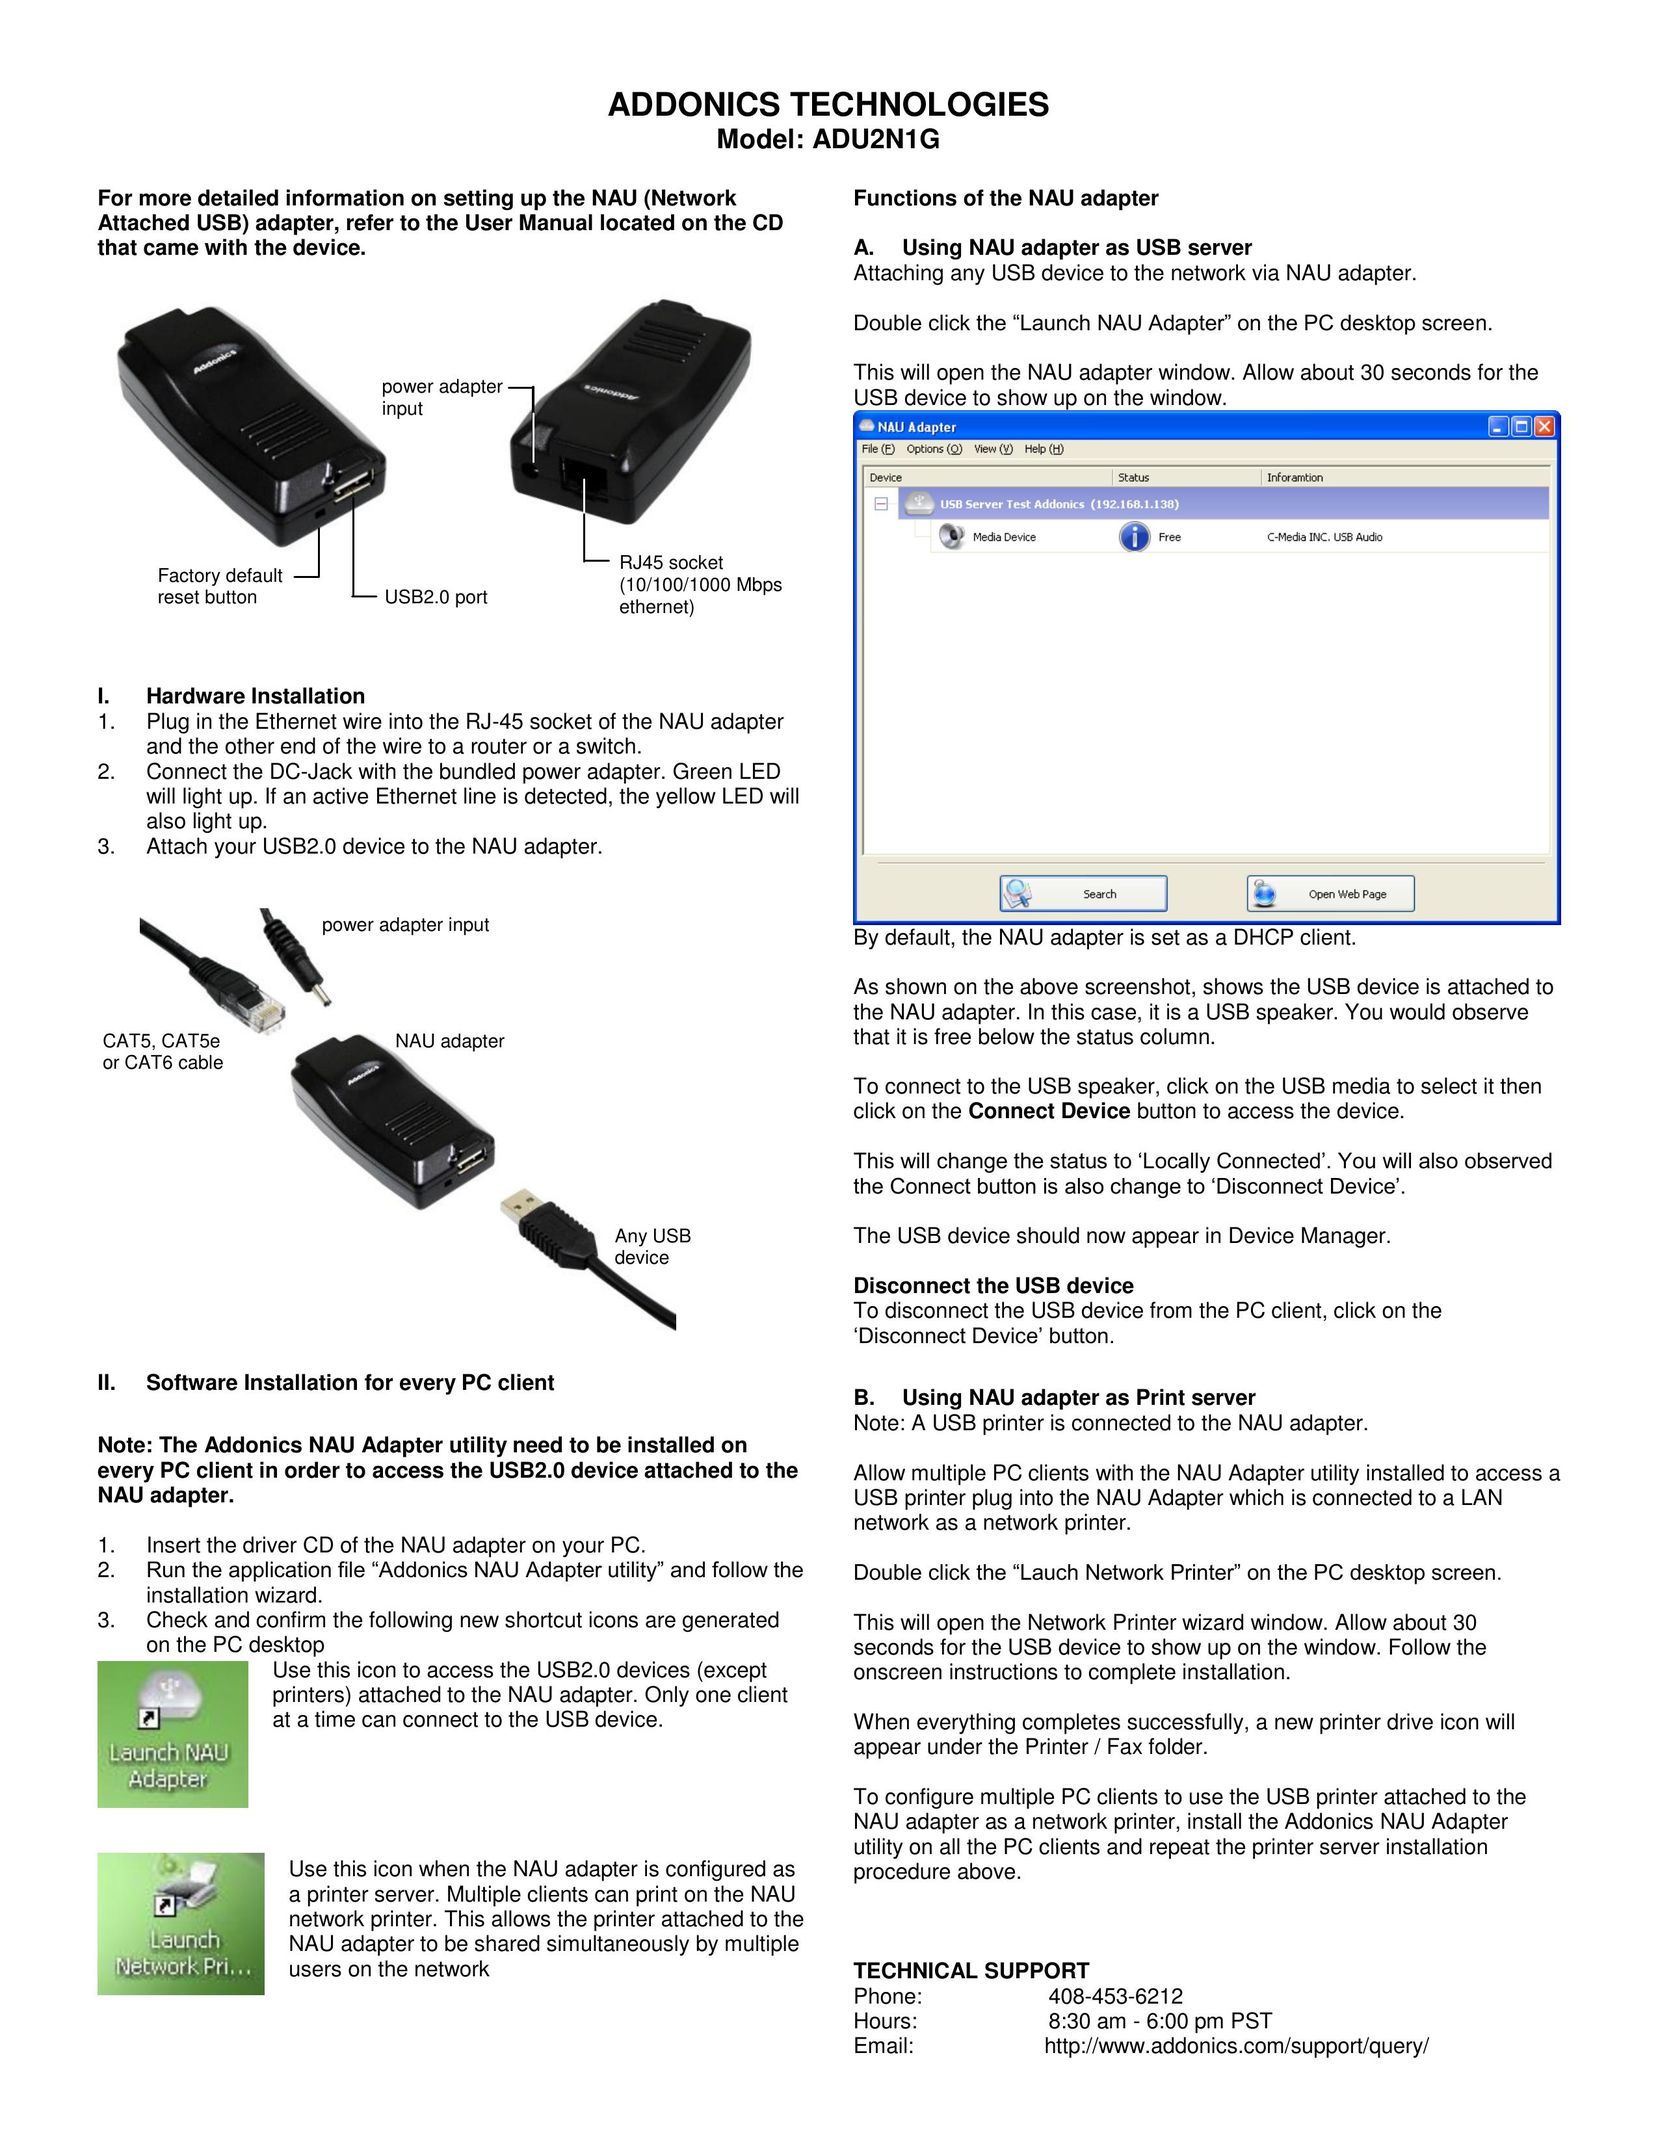 Addonics Technologies ADU2N1G Network Card User Manual